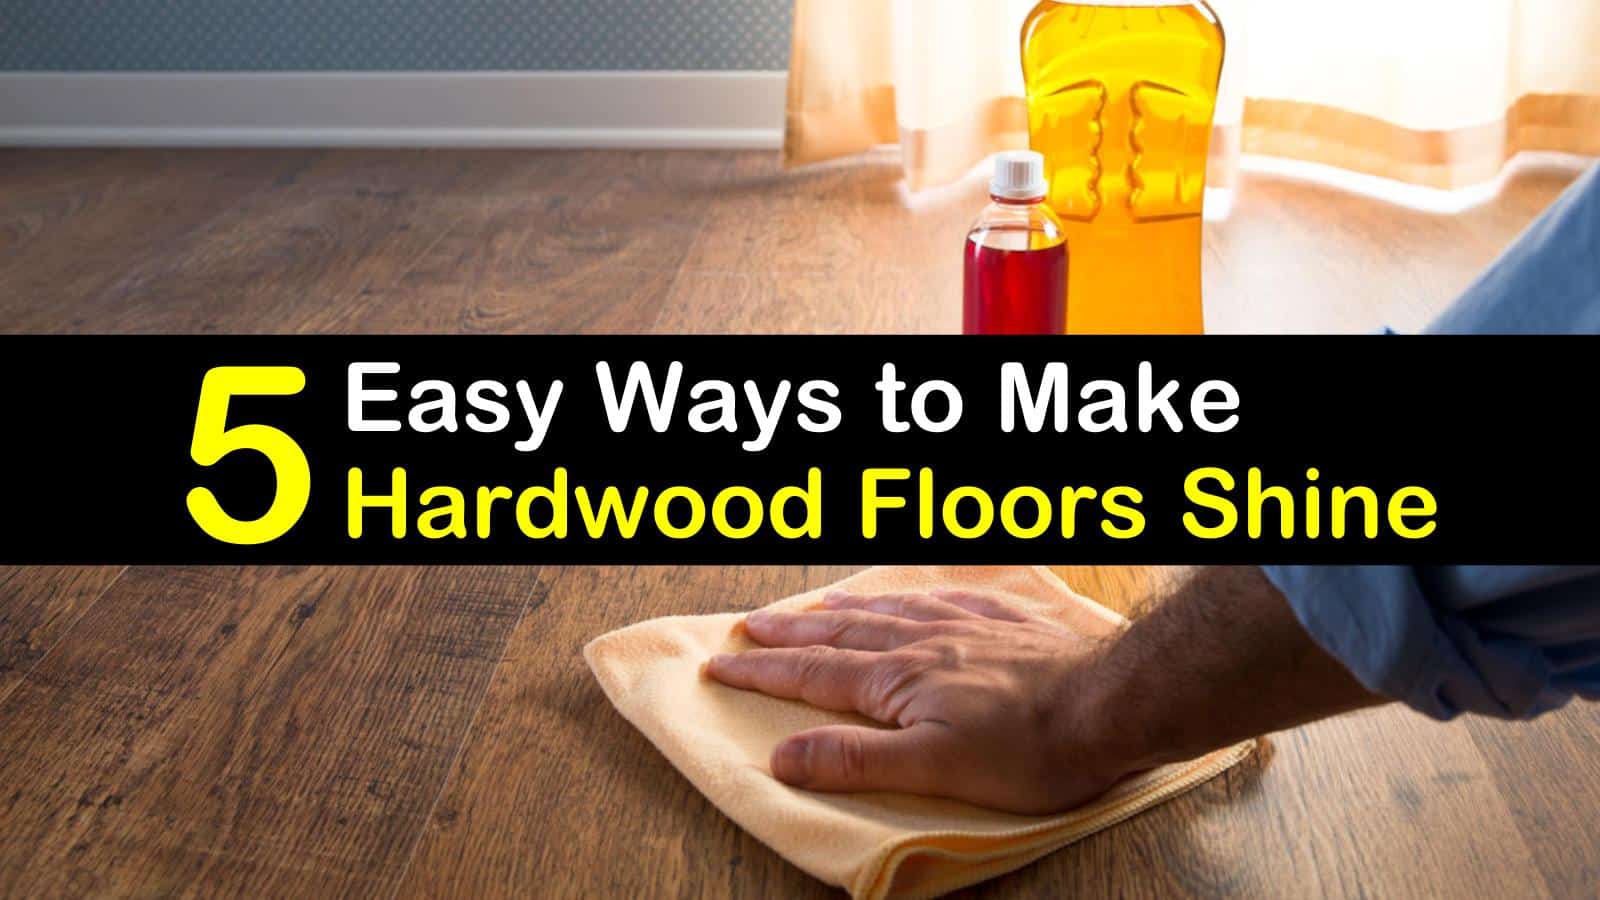 5 Easy Ways To Make Hardwood Floors Shine, How To Shine Hardwood Floors